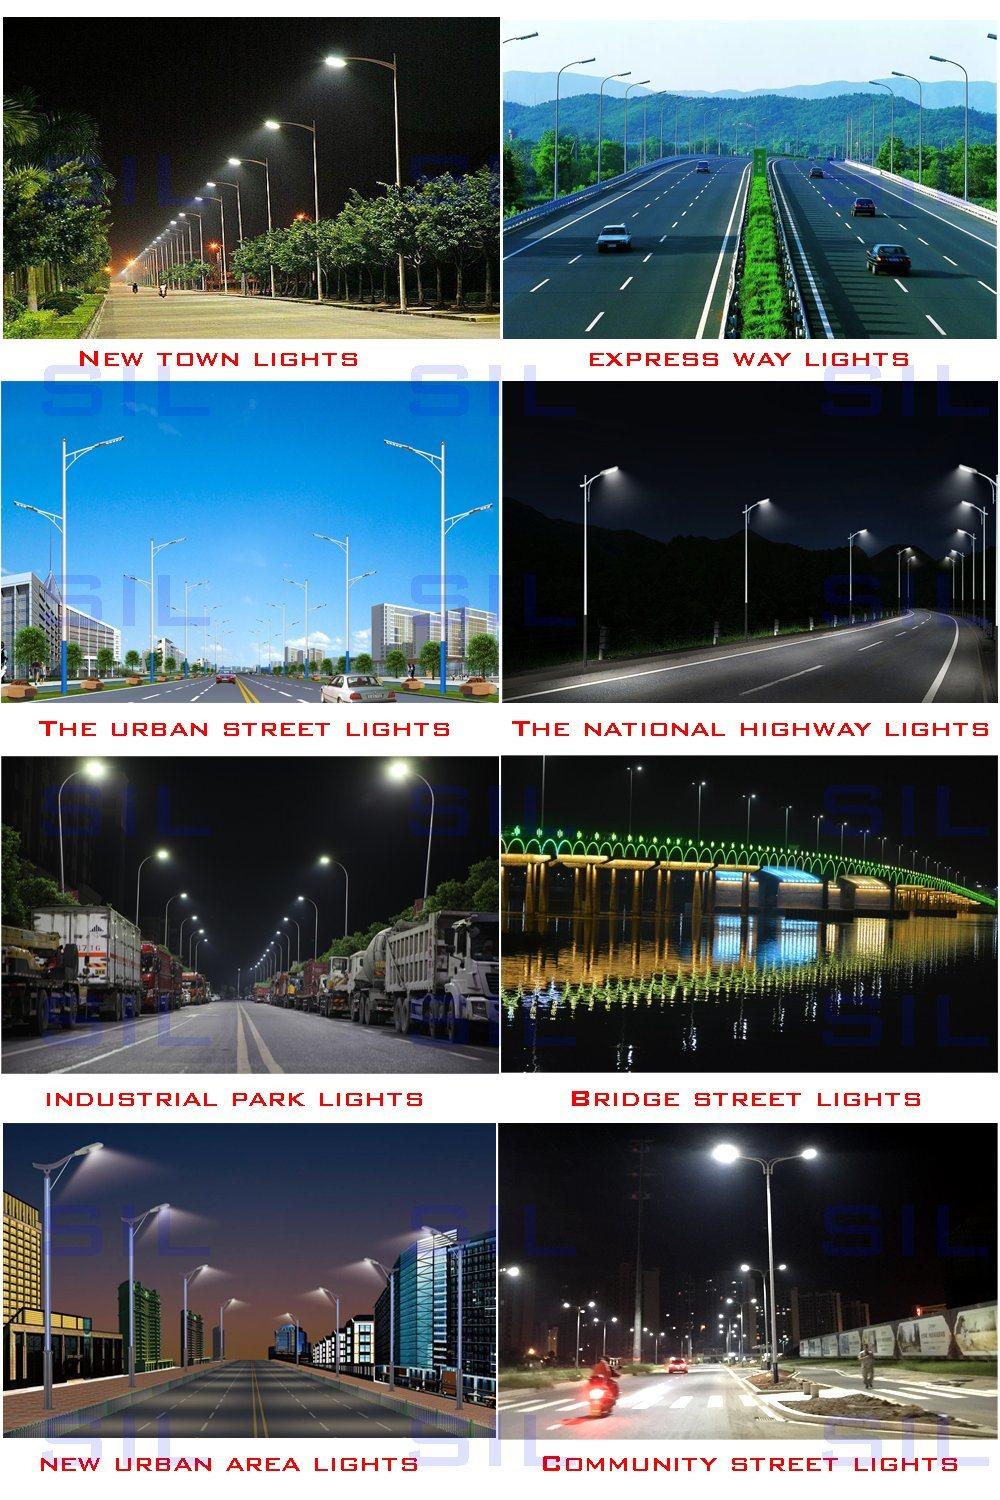 Outdoor Street Light Road Fixtures SMD3030 50watt LED Street Light